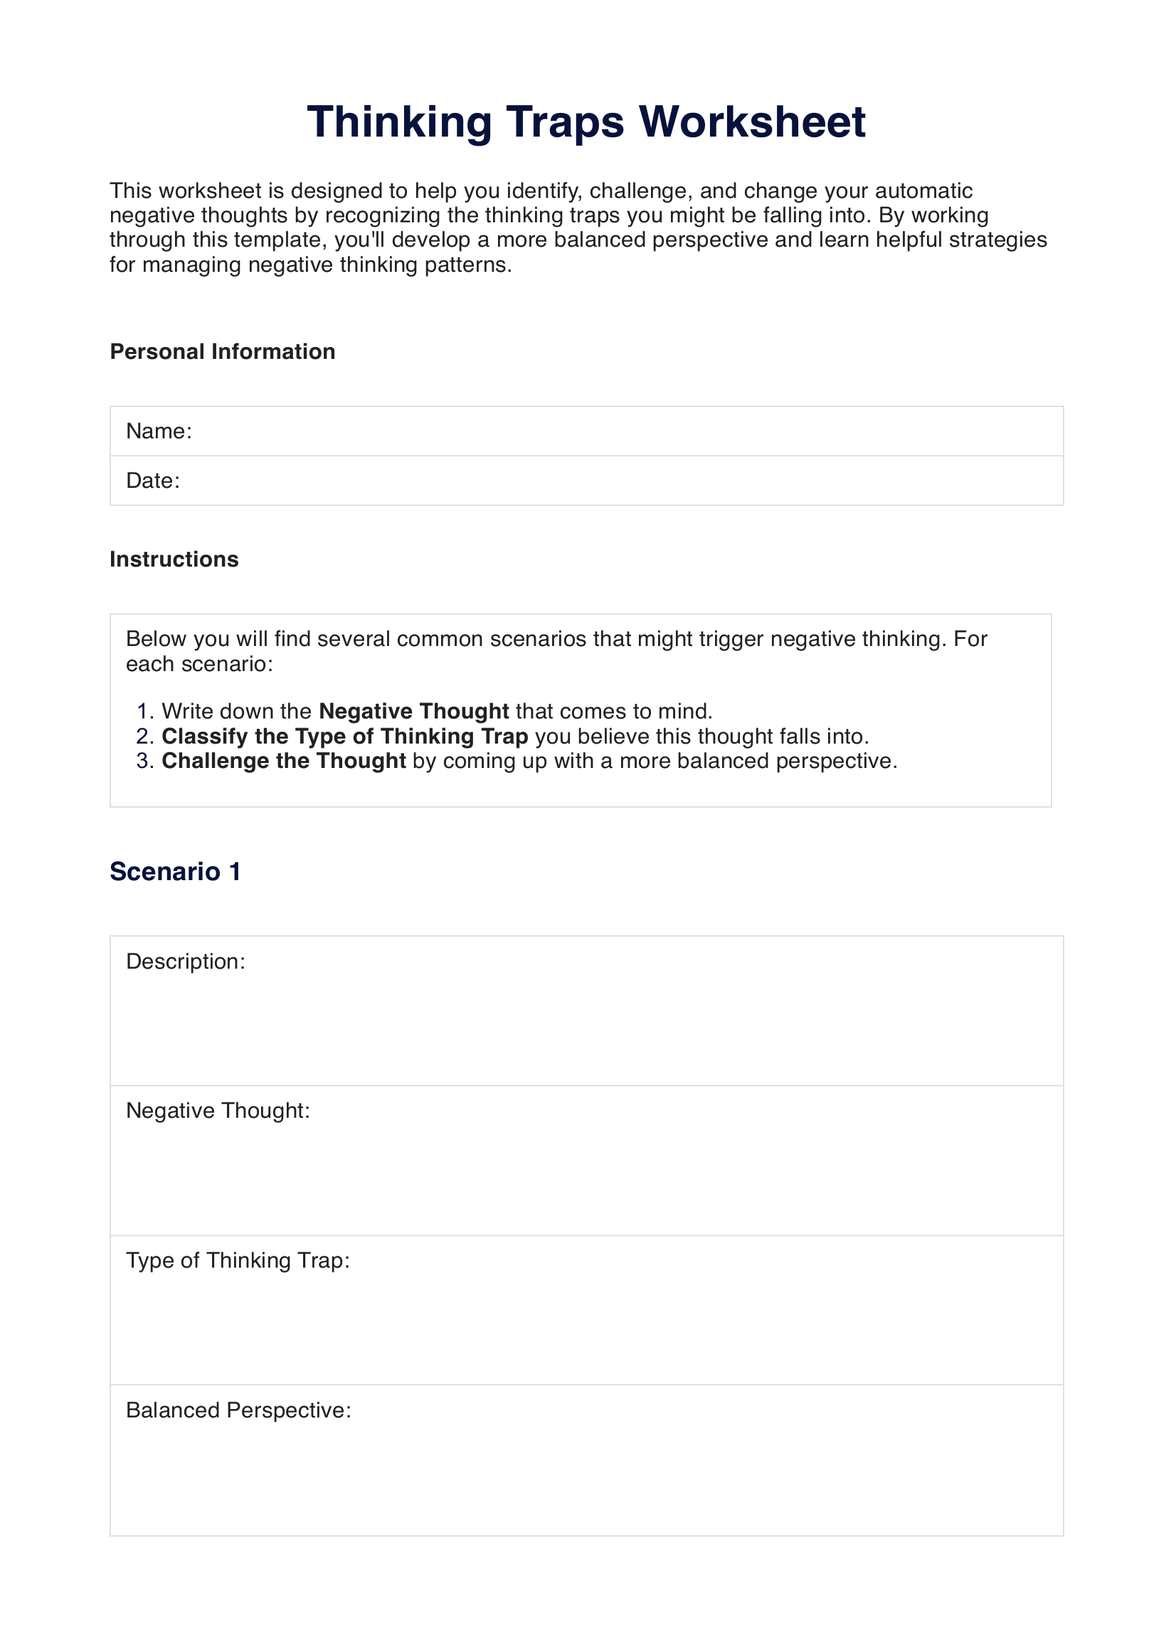 Thinking Traps Worksheet PDF Example